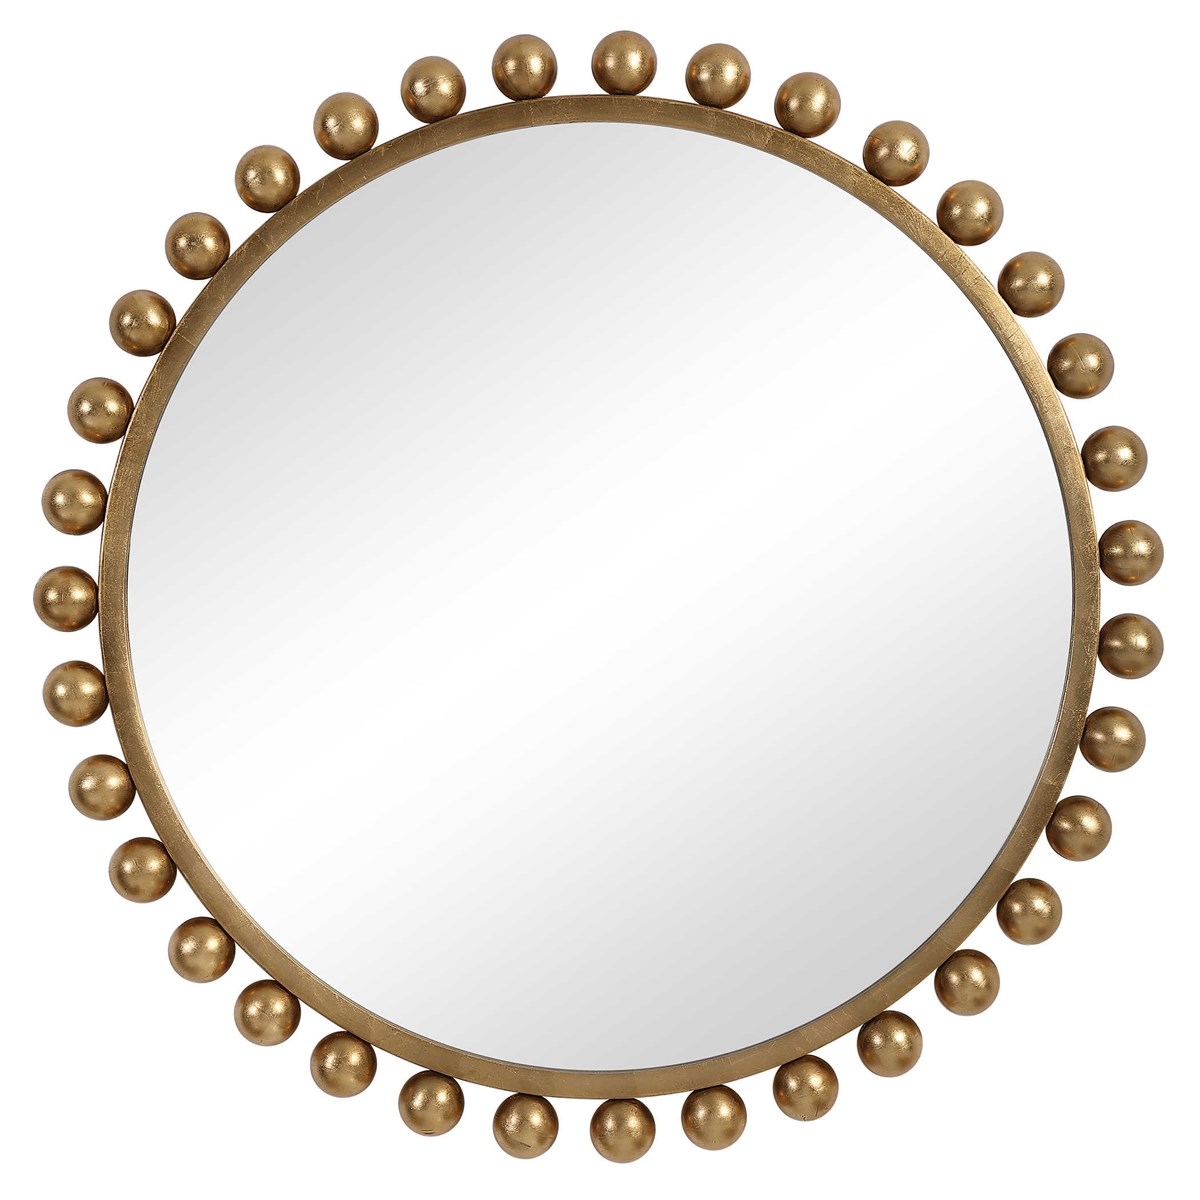 Cyra Round Mirror, Gold - Image 0